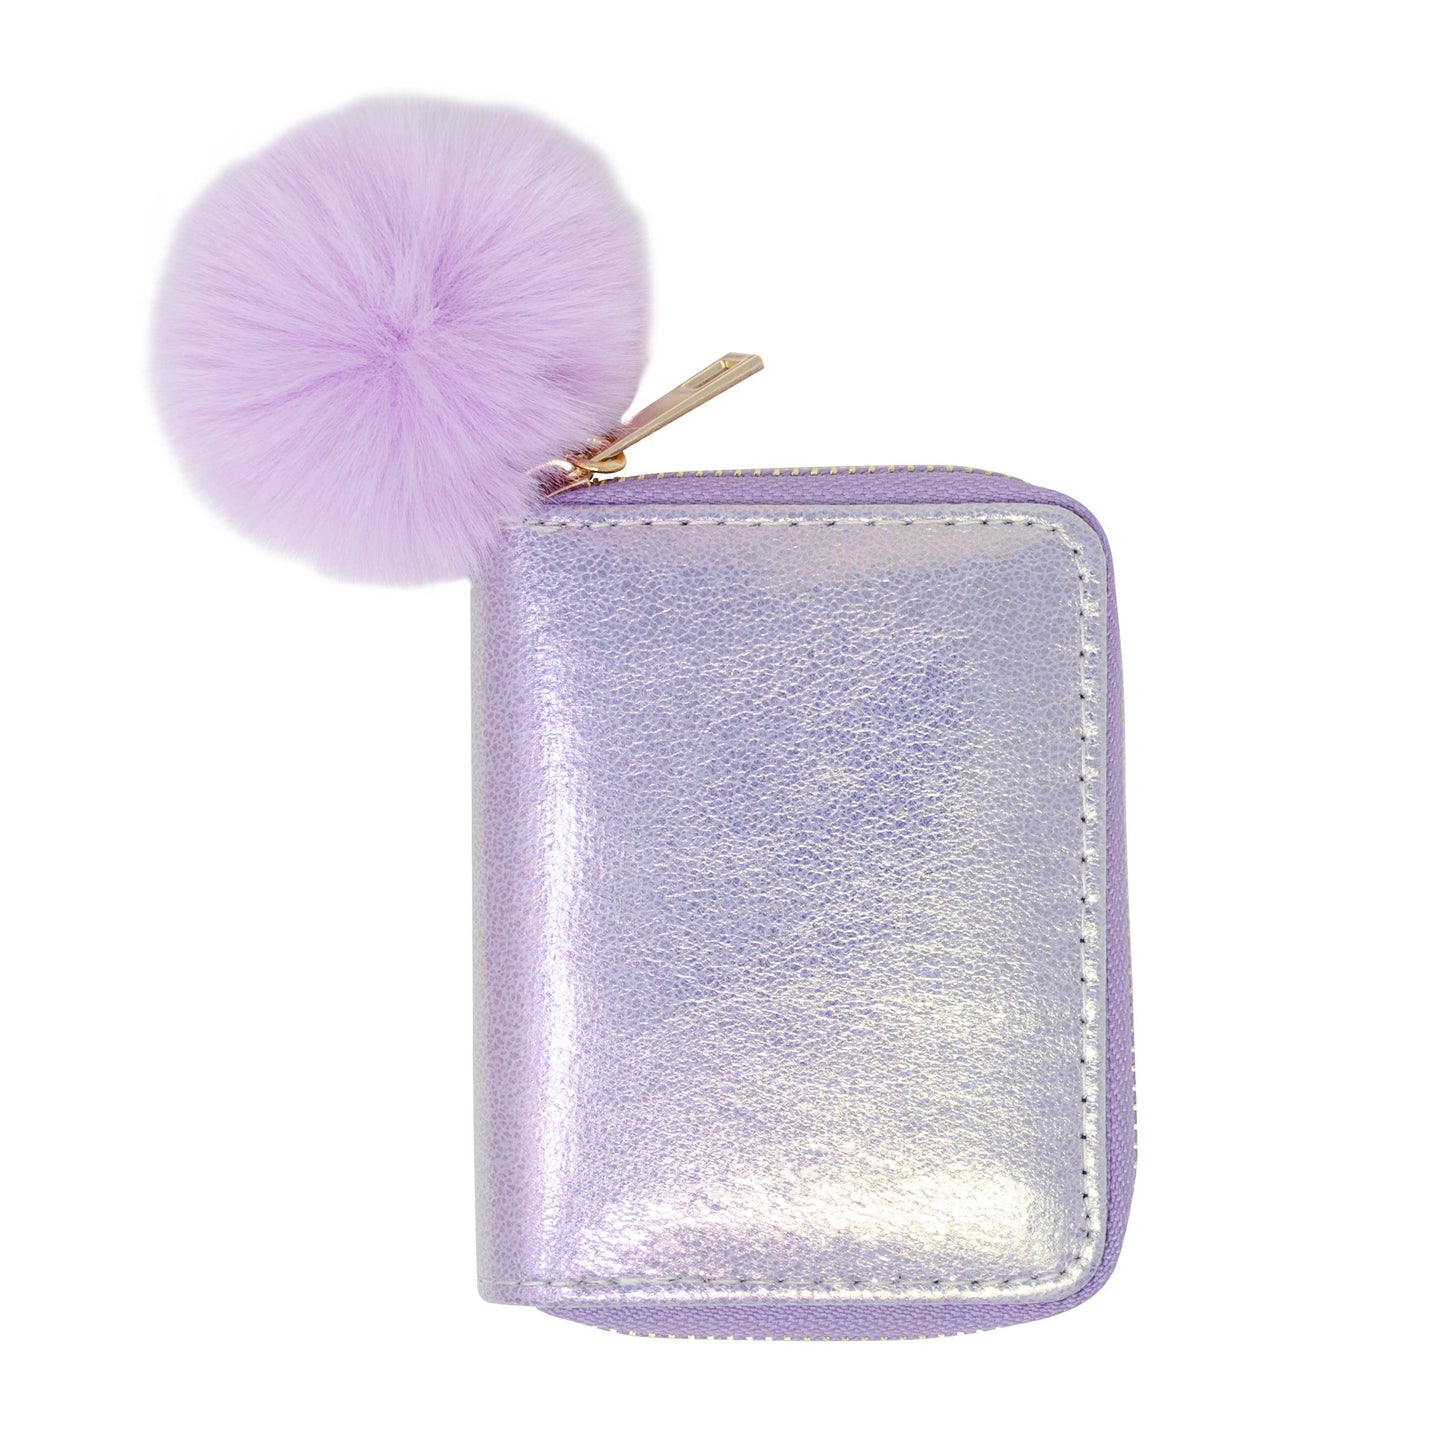 Shiny Wallet in Lavender